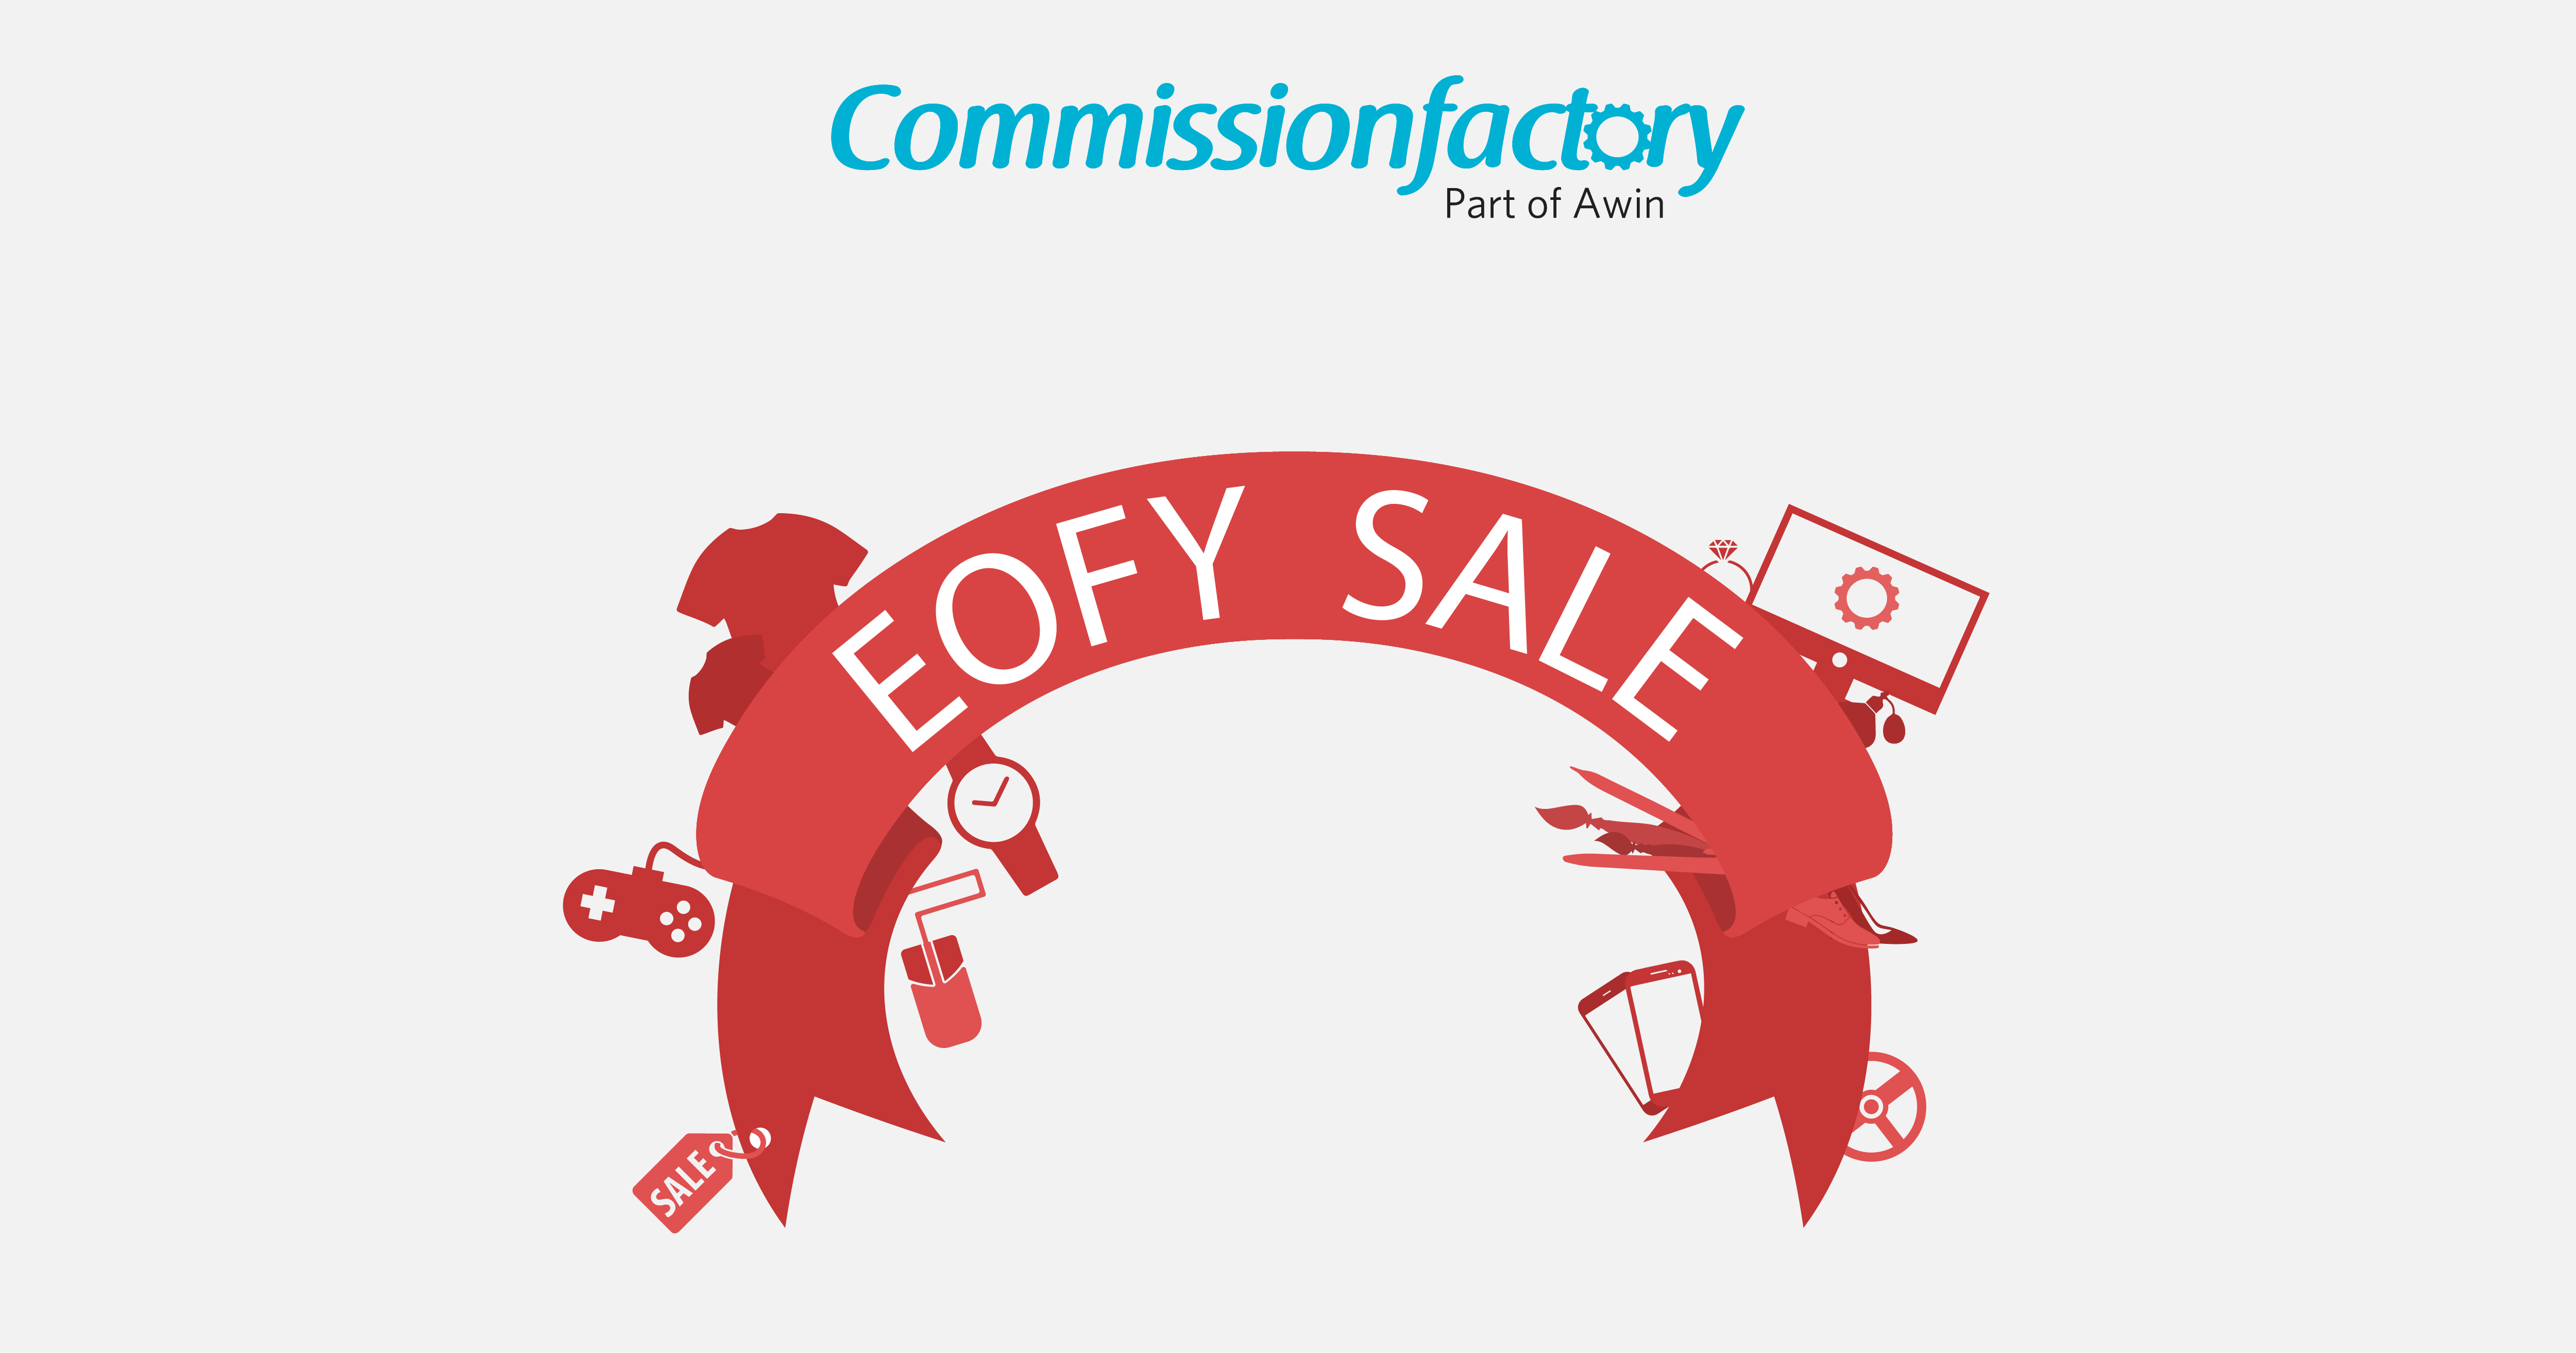 EOFY Sale_Commission_Factory